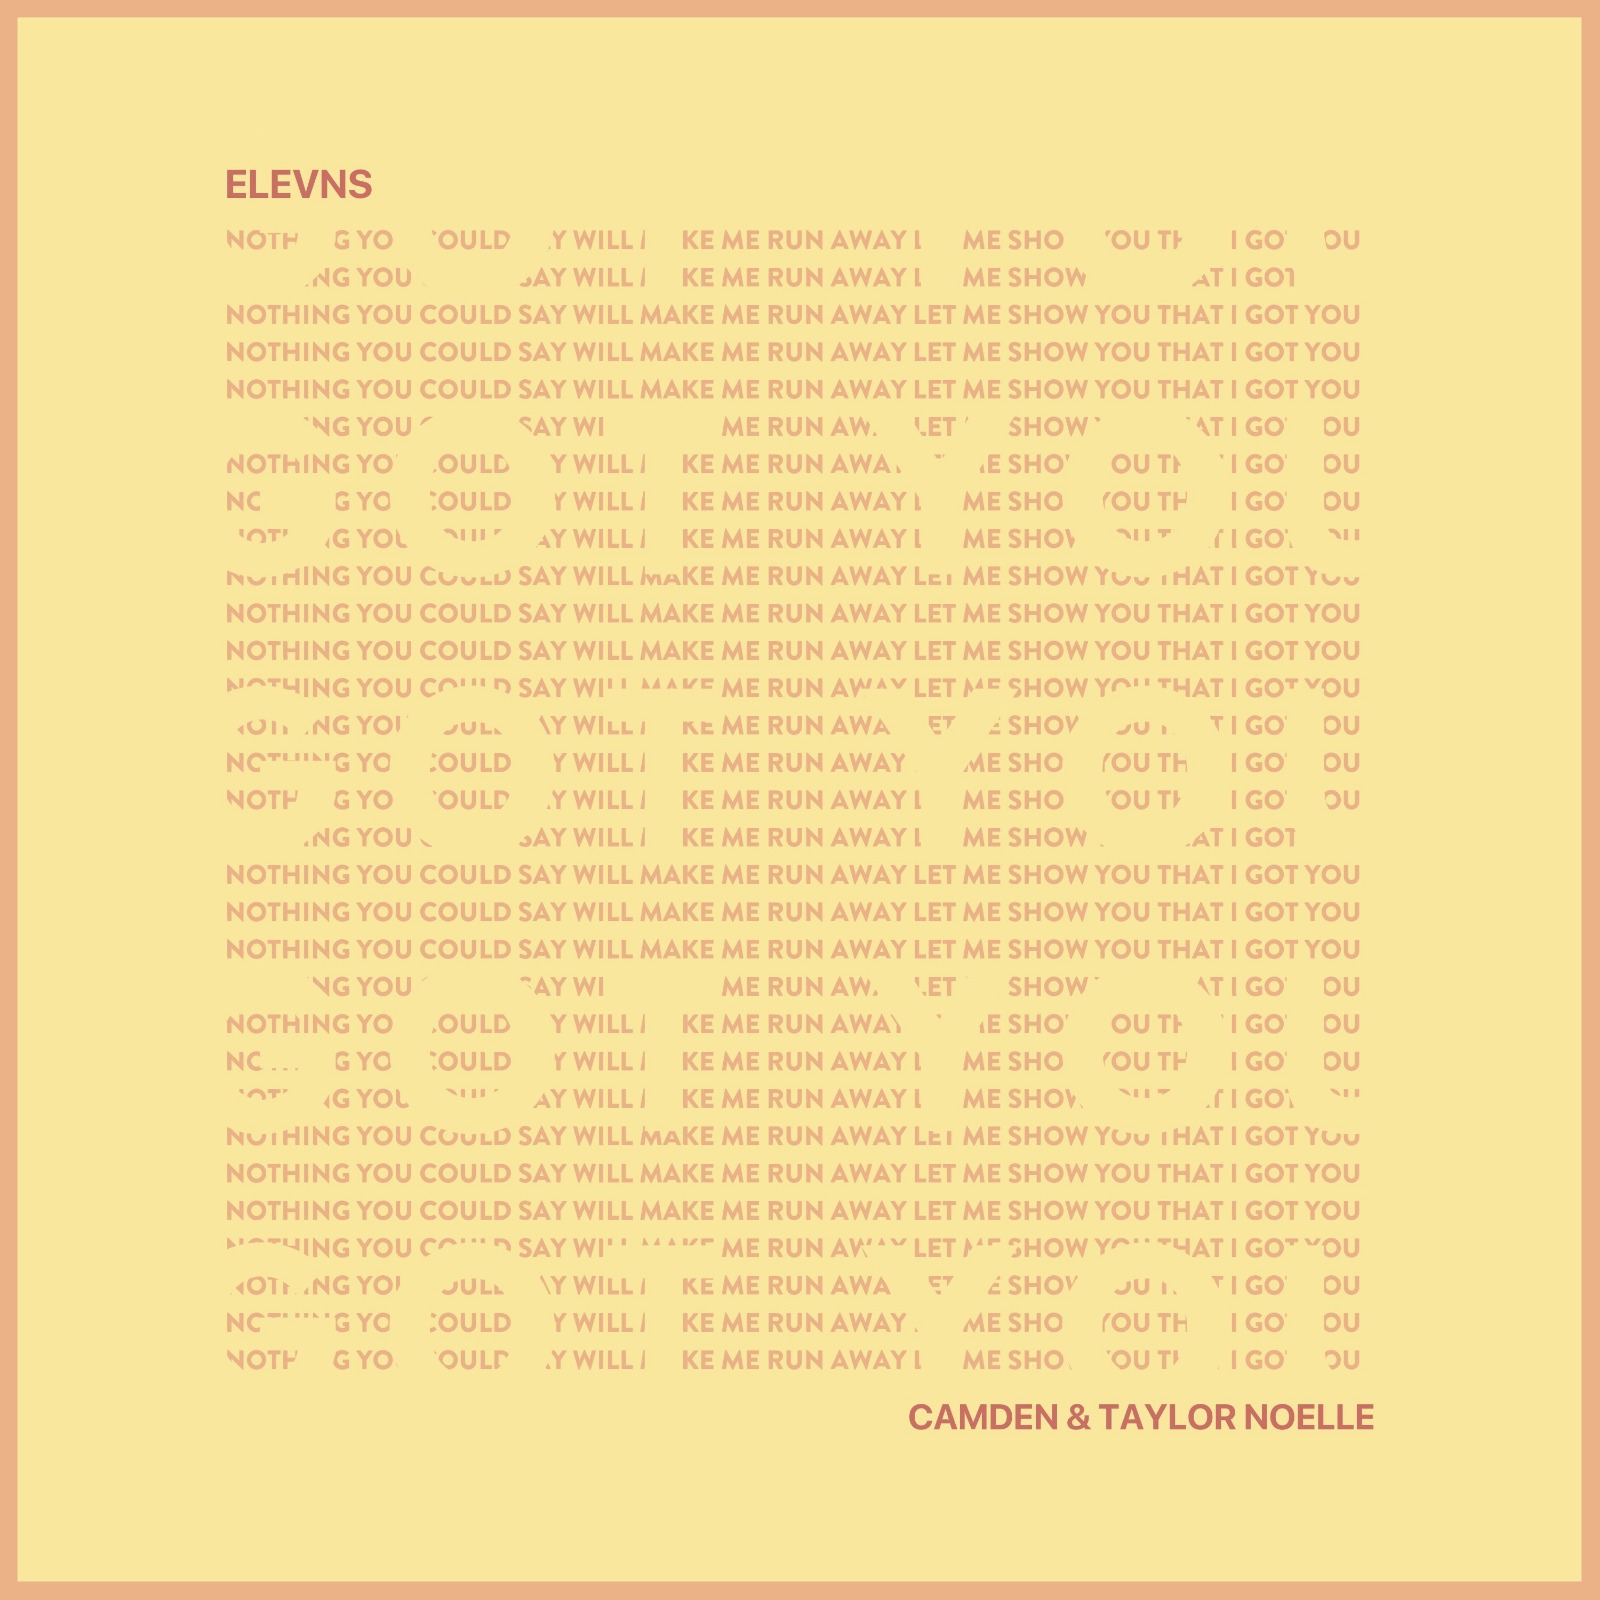 Got You - ELEVNS ft. Camden x Taylor Noelle